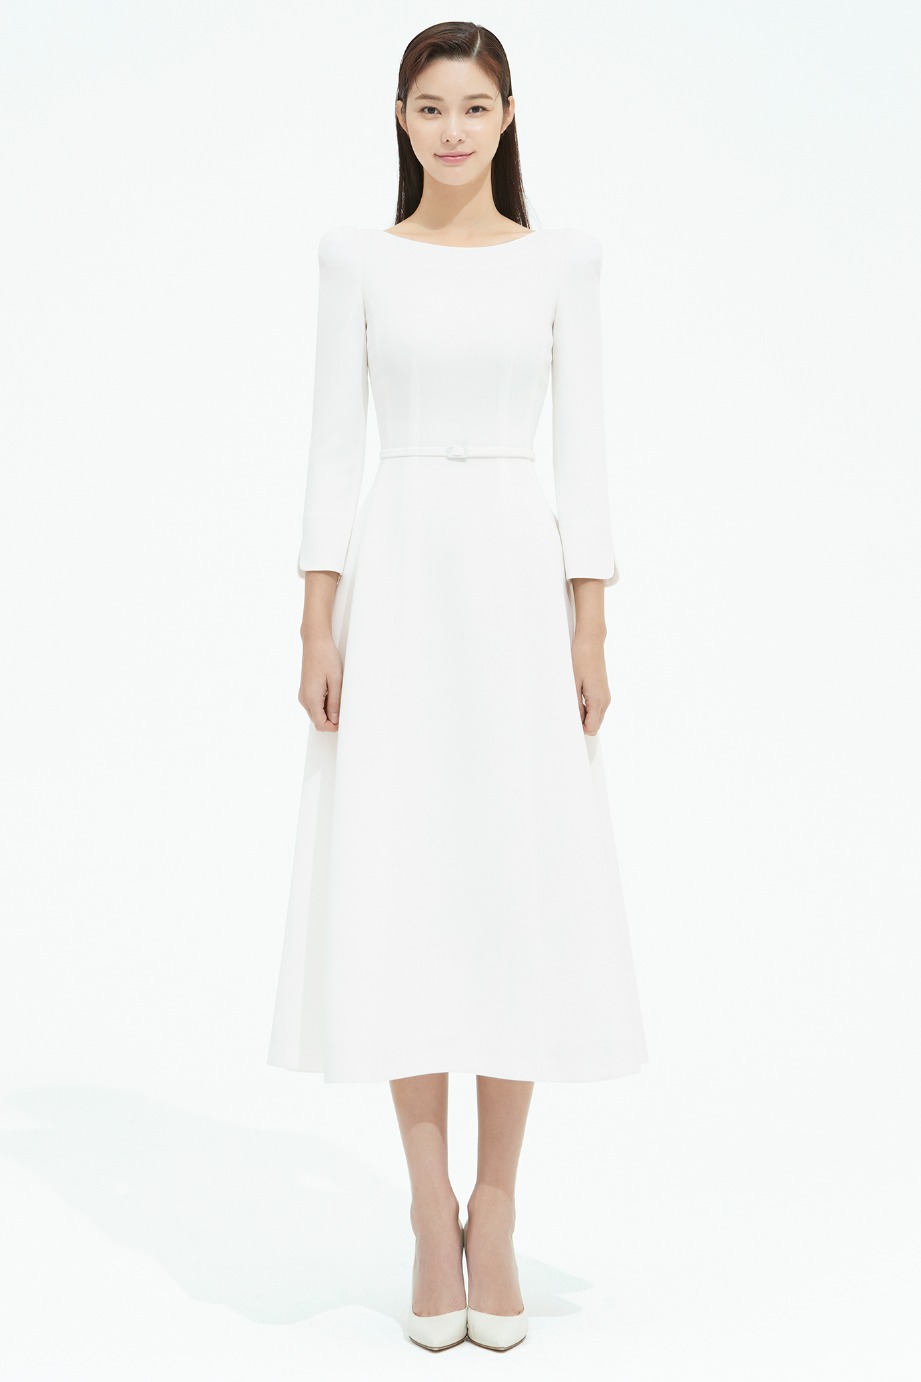 Buy zooomberg White Long Sleeve Embossed Flare Dress (Medium) at Amazon.in